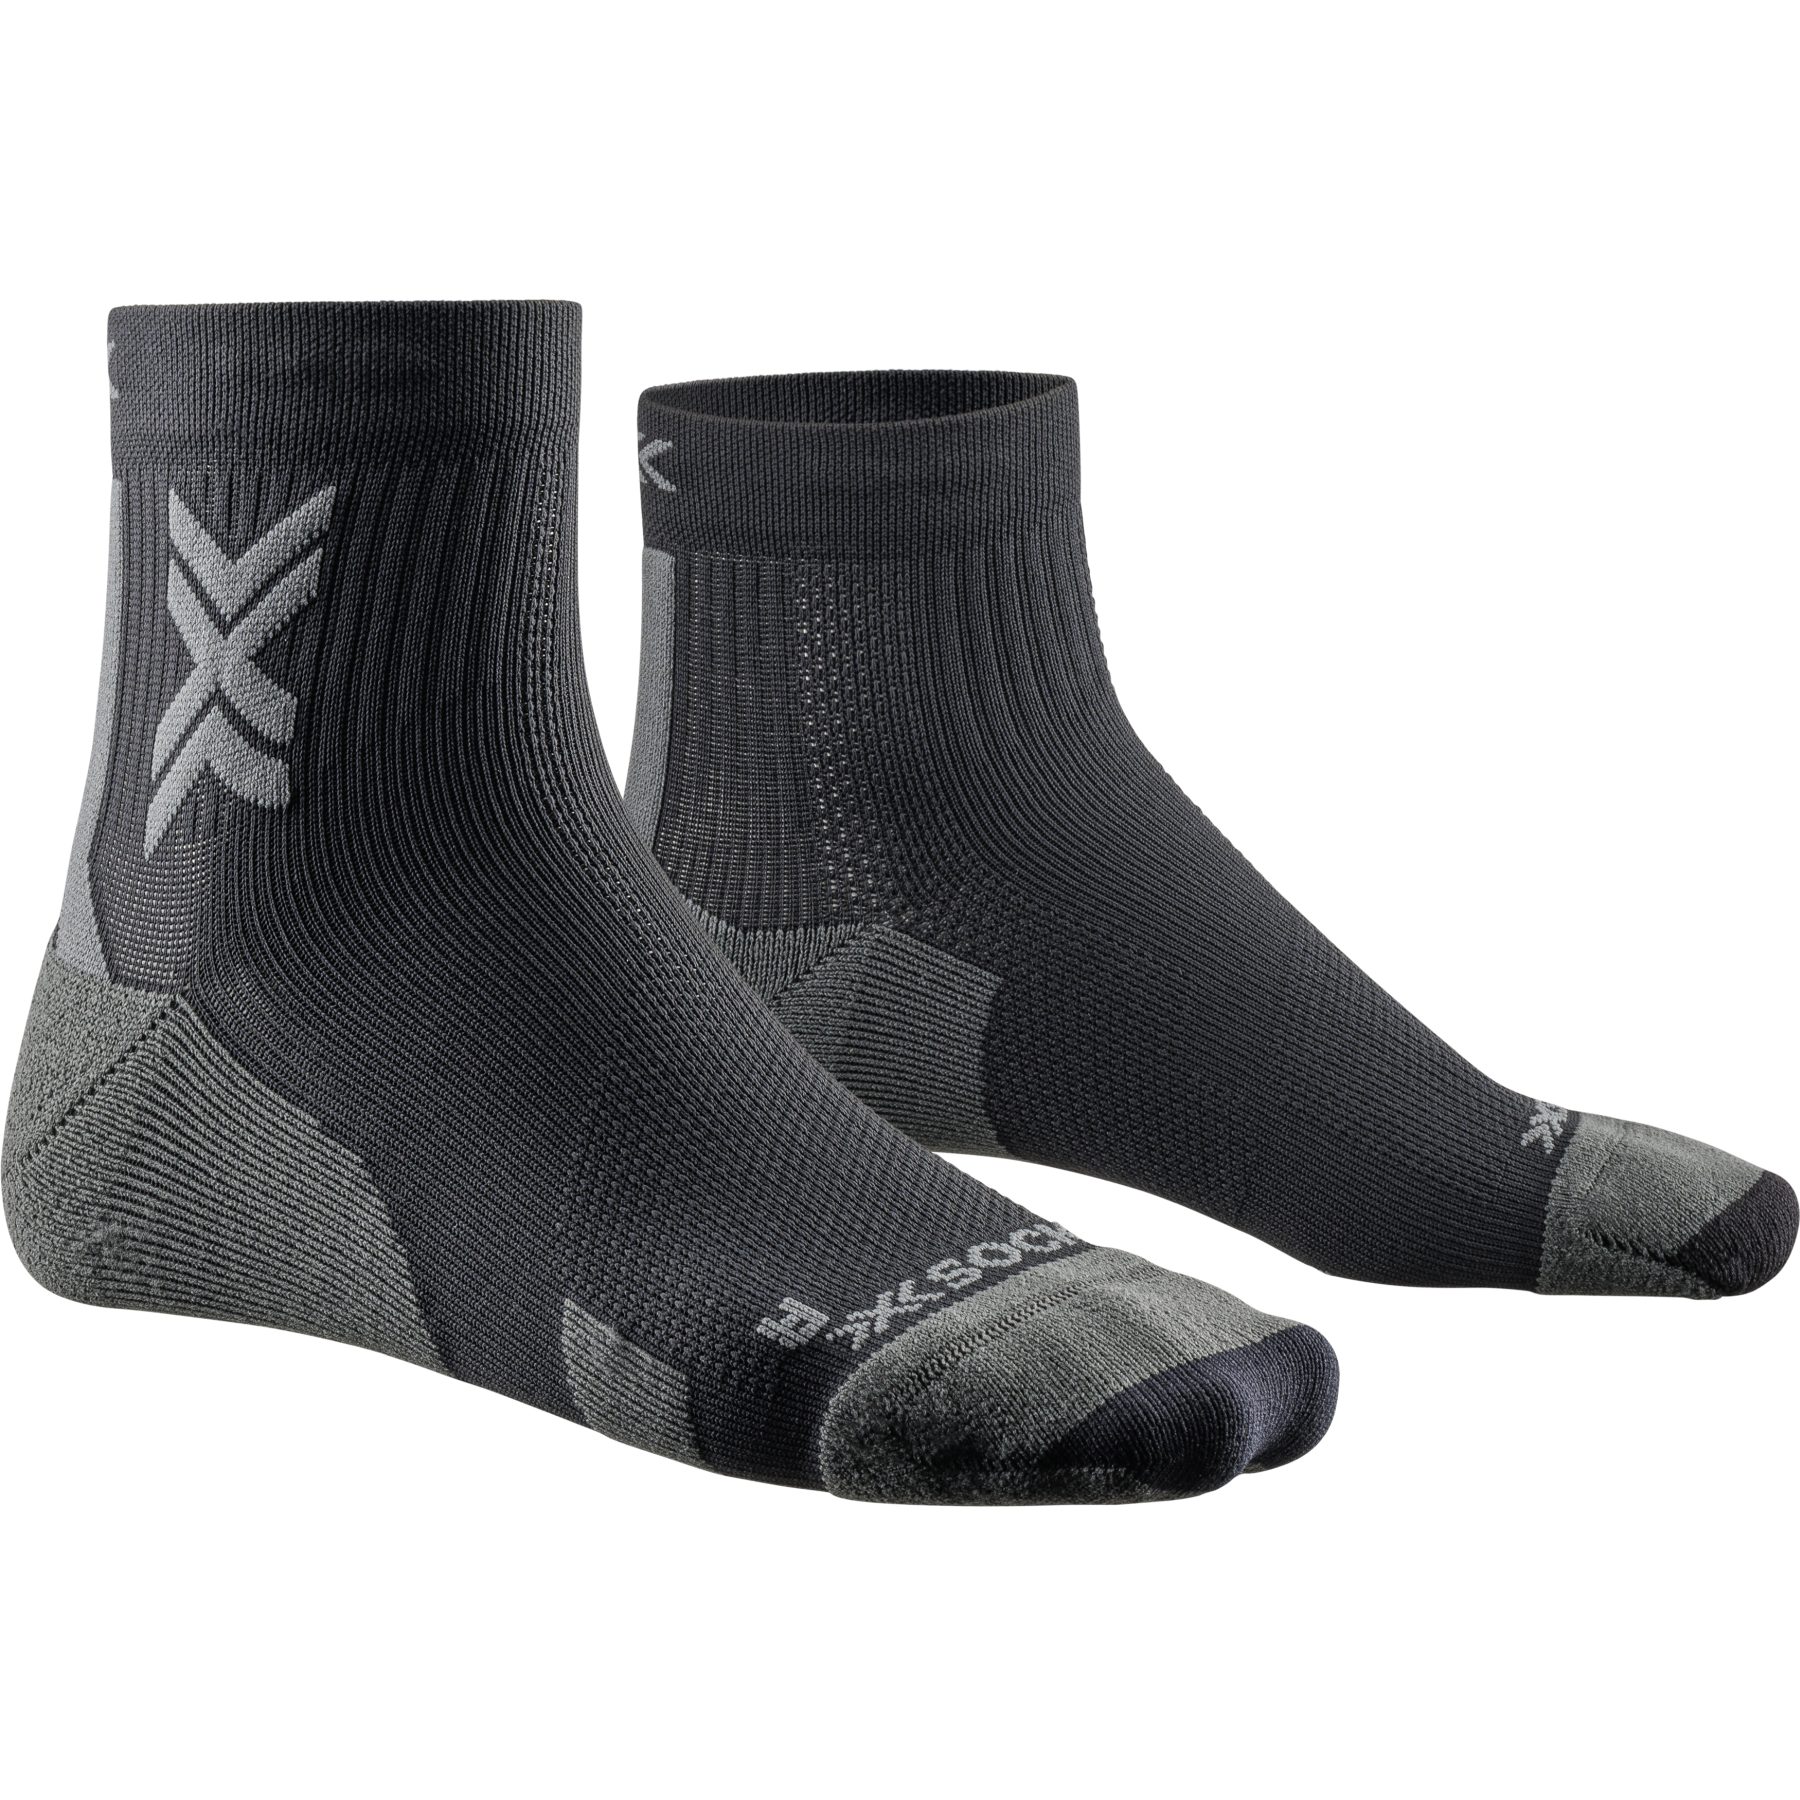 Produktbild von X-Socks Run Discover Ankle Laufsocken Herren - black/charcoal